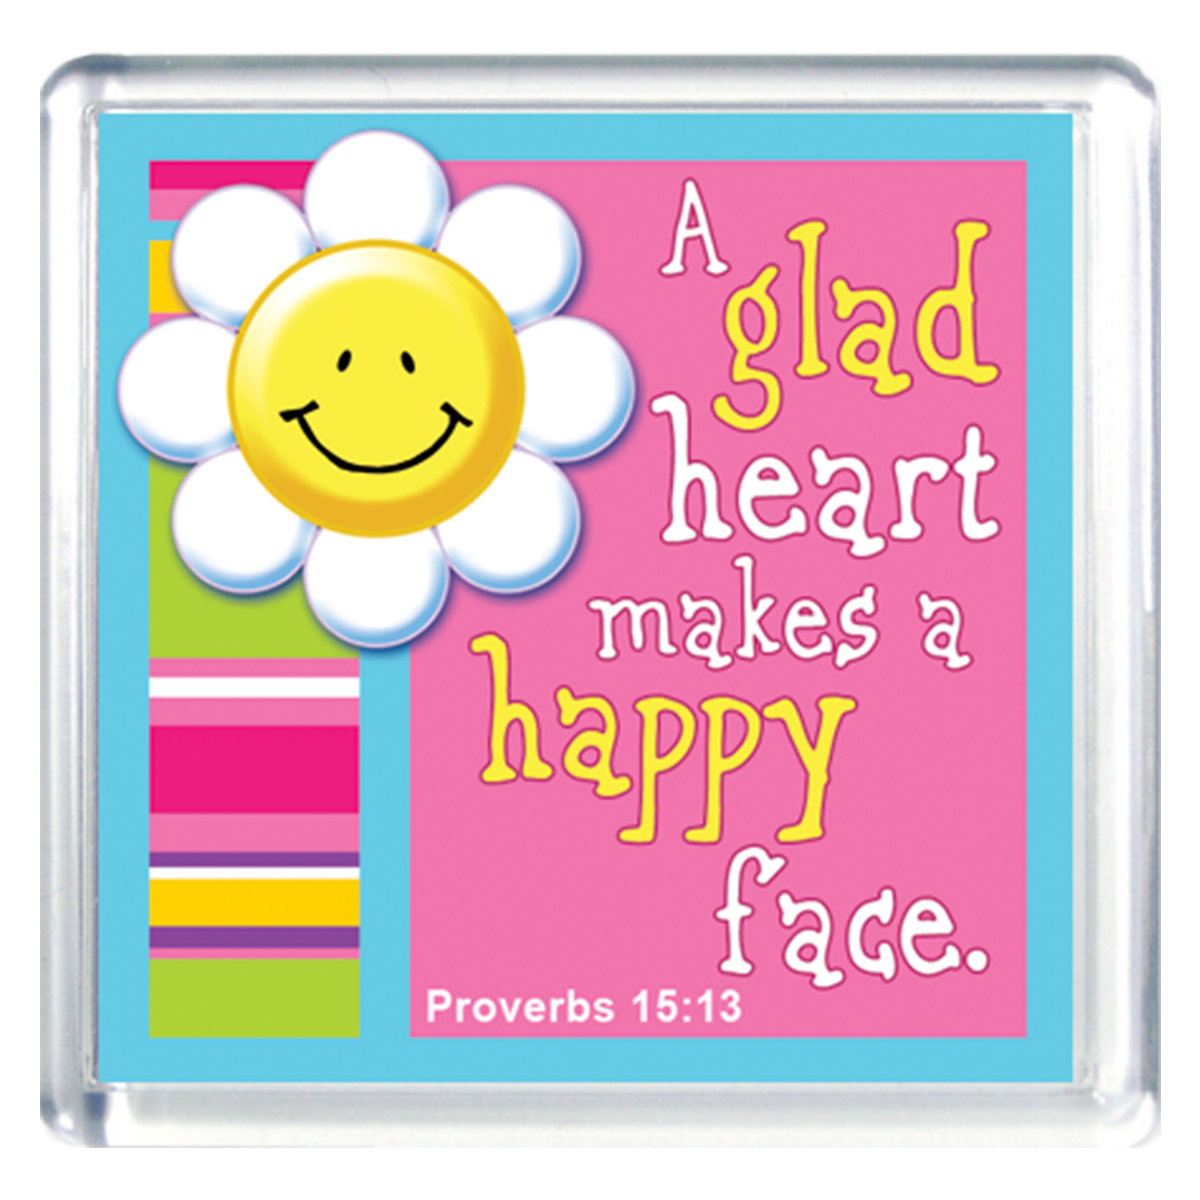 Acrylic Magnet: A Glad Heart - Proverbs 15:13 - Shalom Media Store